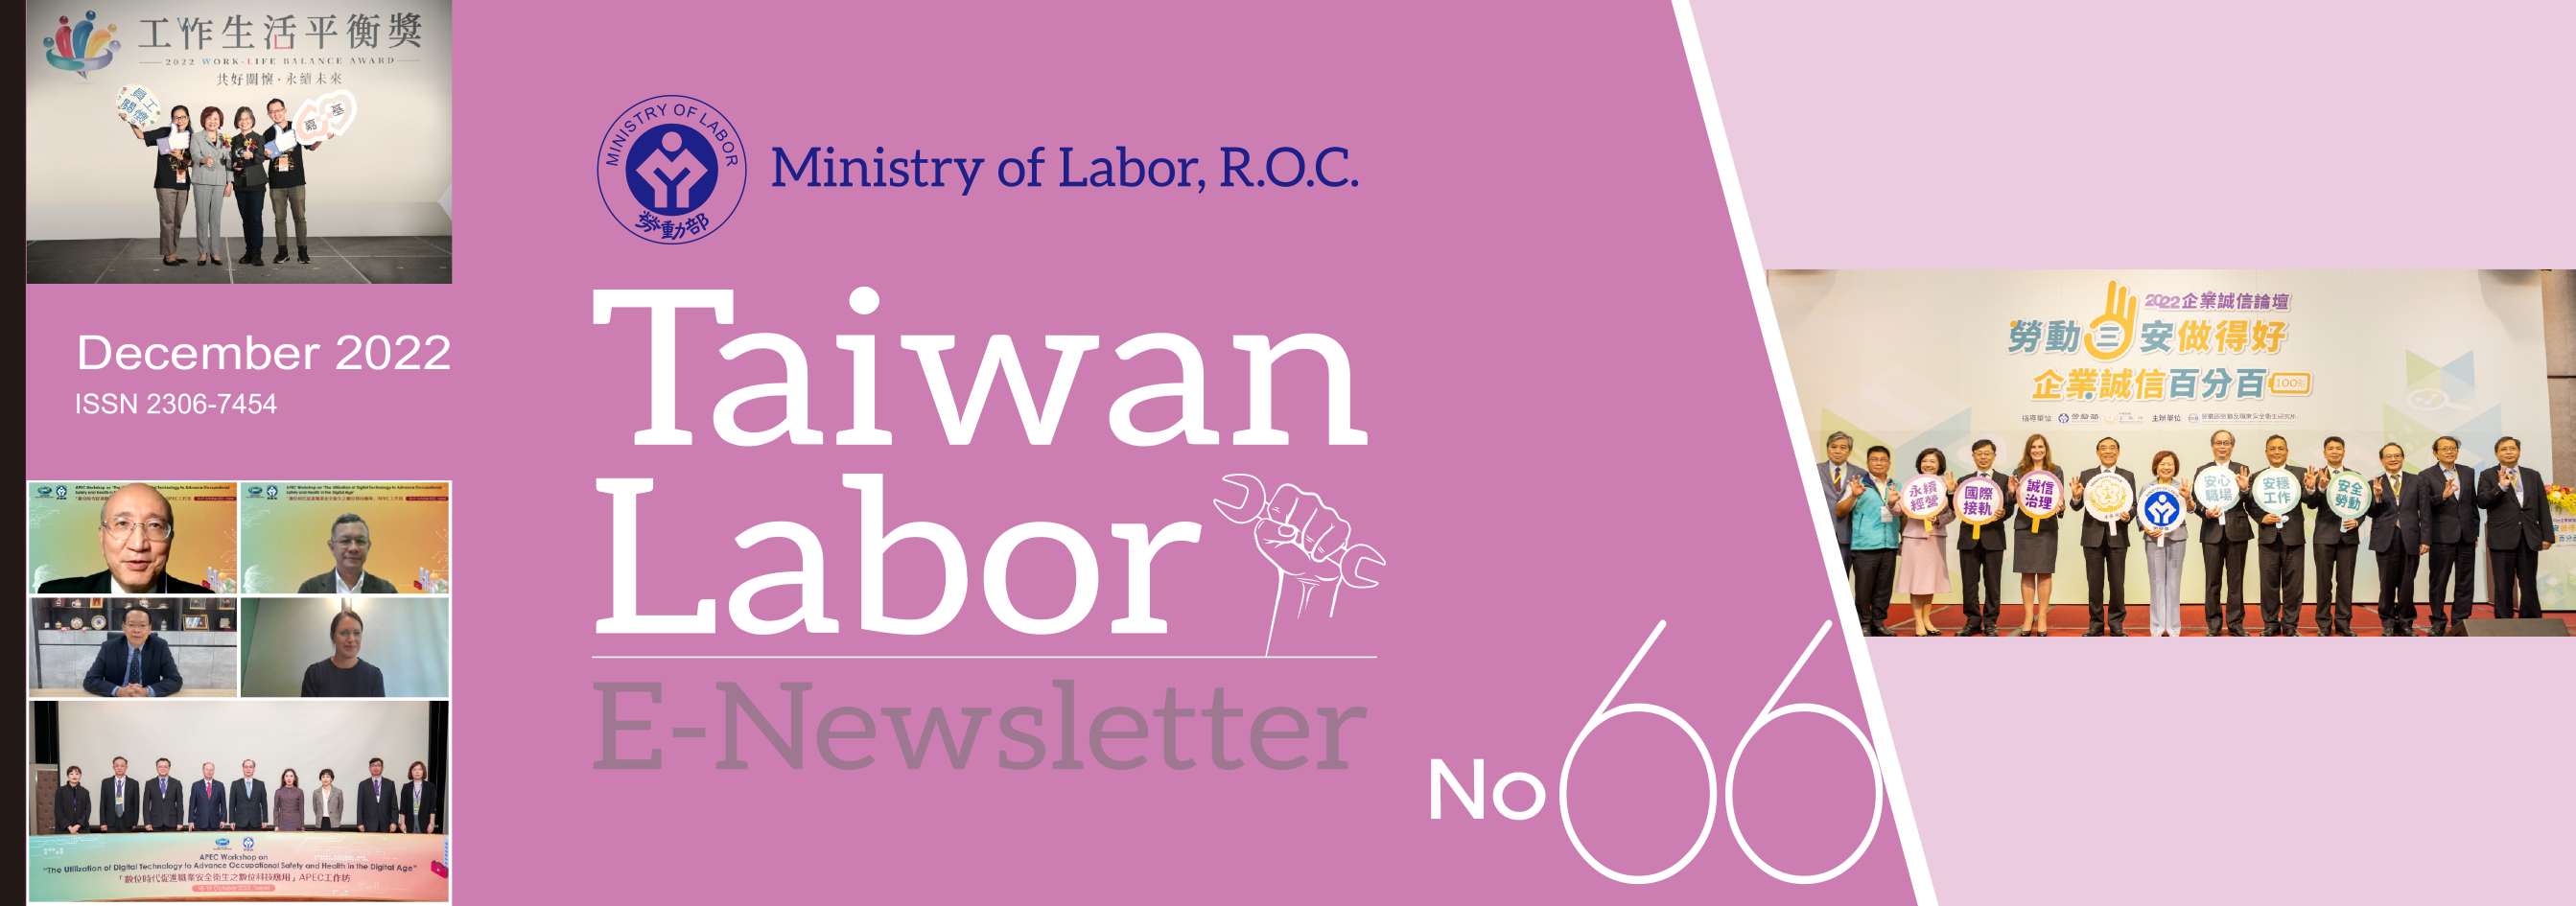 Taiwan Labor E-Newsletter No.66 Banner